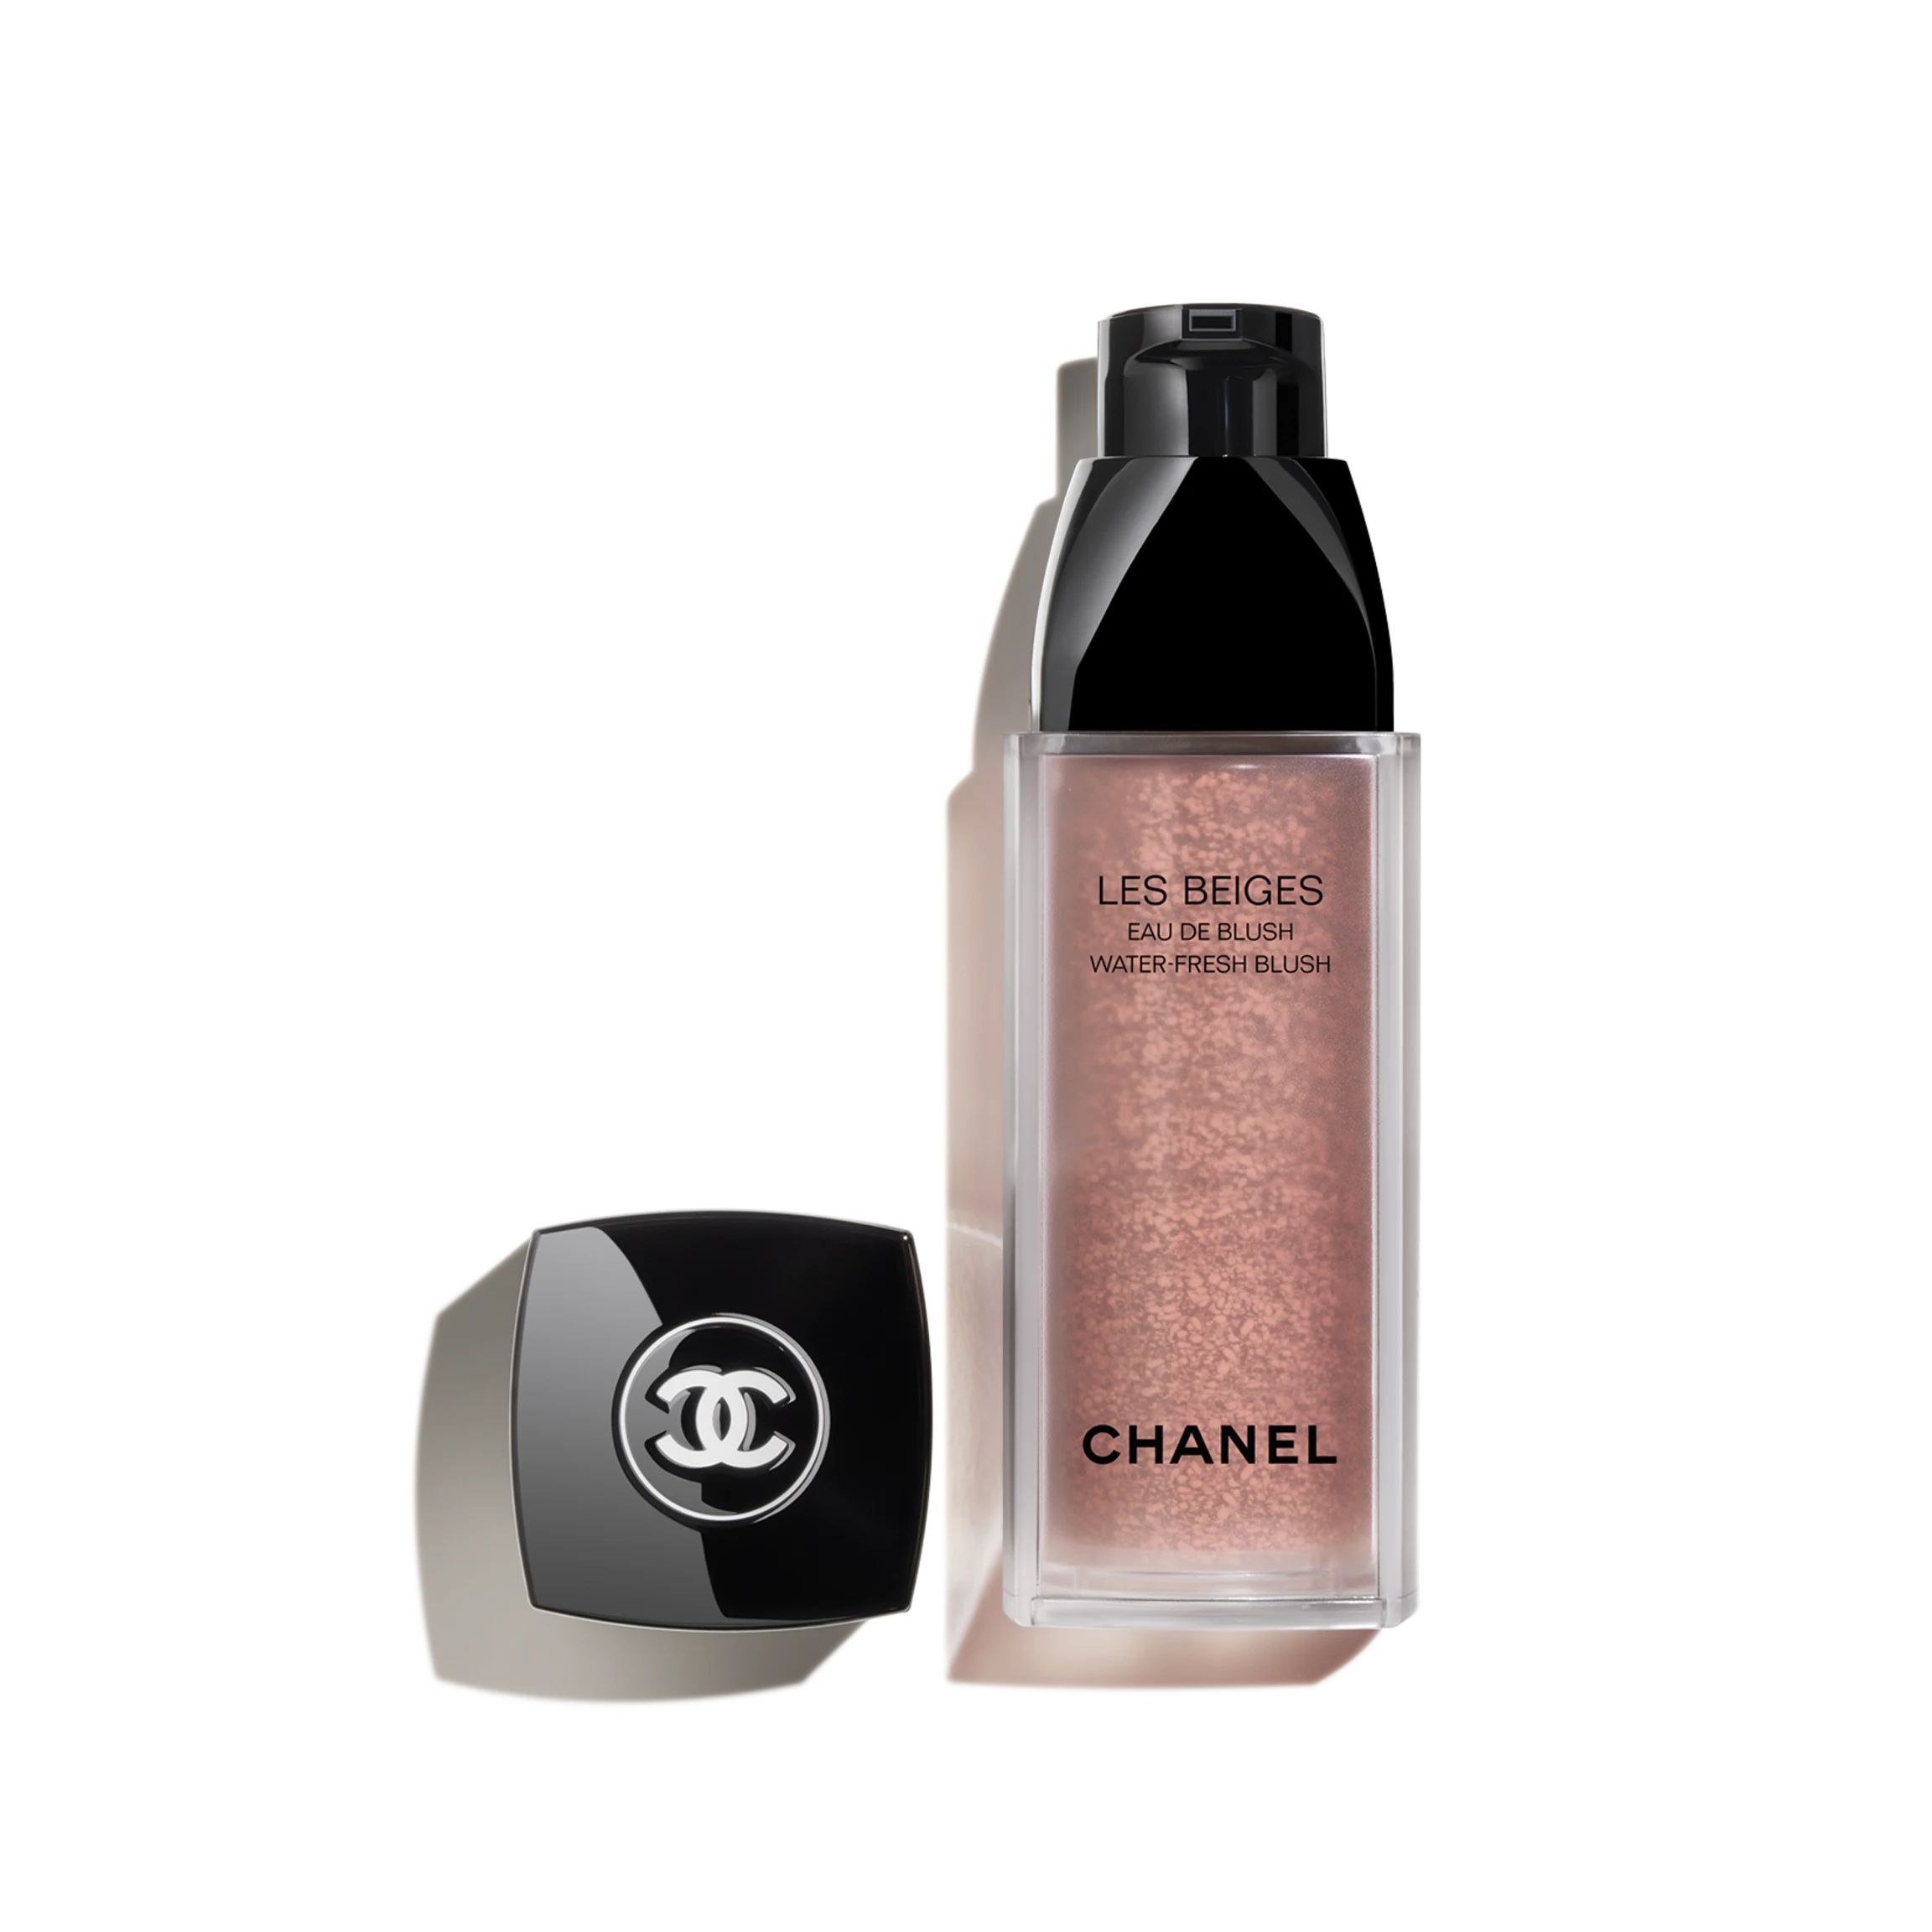 LES BEIGES Water-fresh blush Light peach | CHANEL | Chanel, Inc. (US)